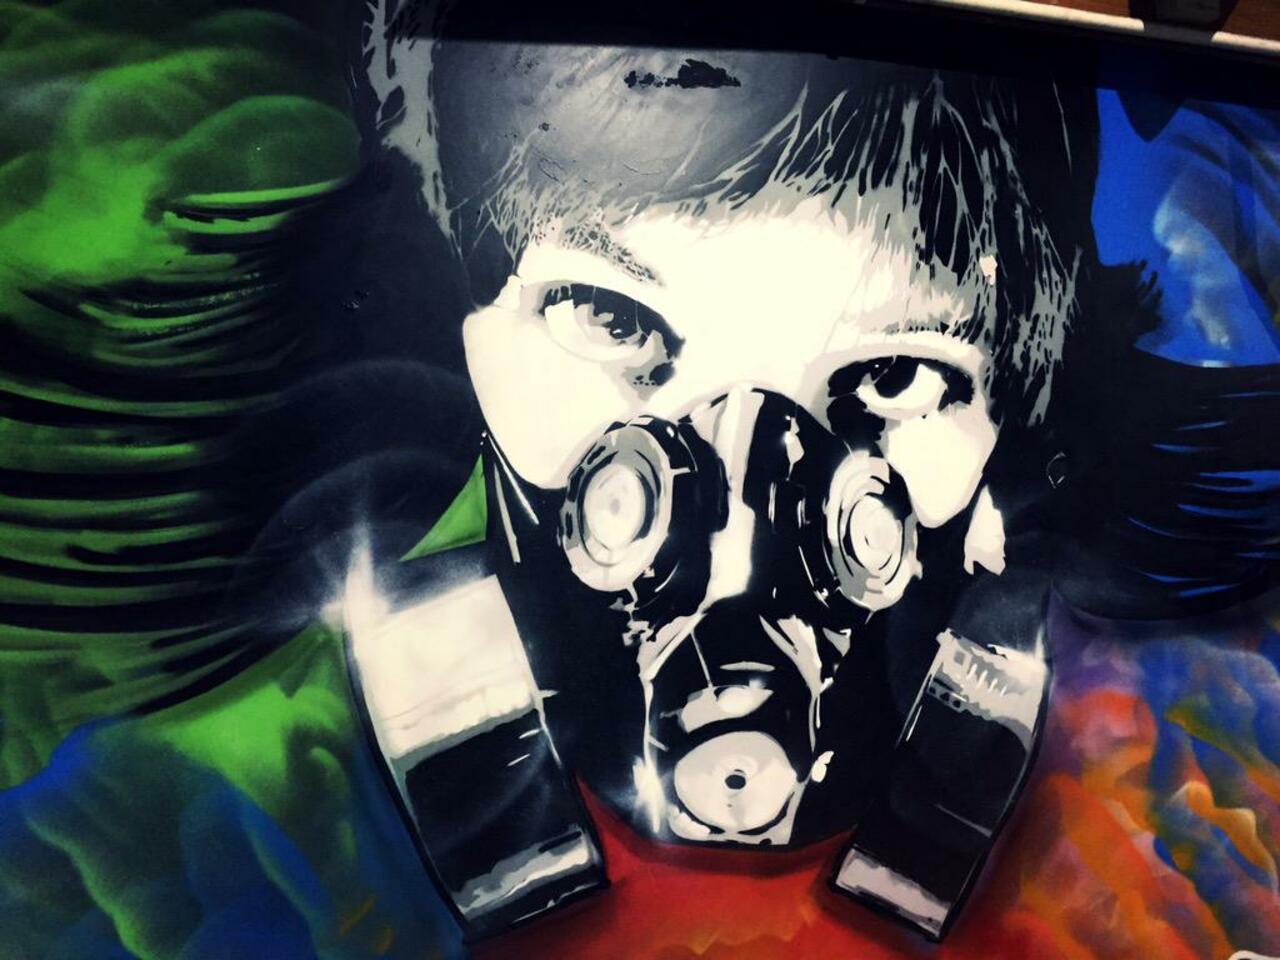 RT @viswaste: Getting gassed in #bangor today #streetart #stencil #graffiti #mural #visualwaste http://t.co/VatU8JOF0O